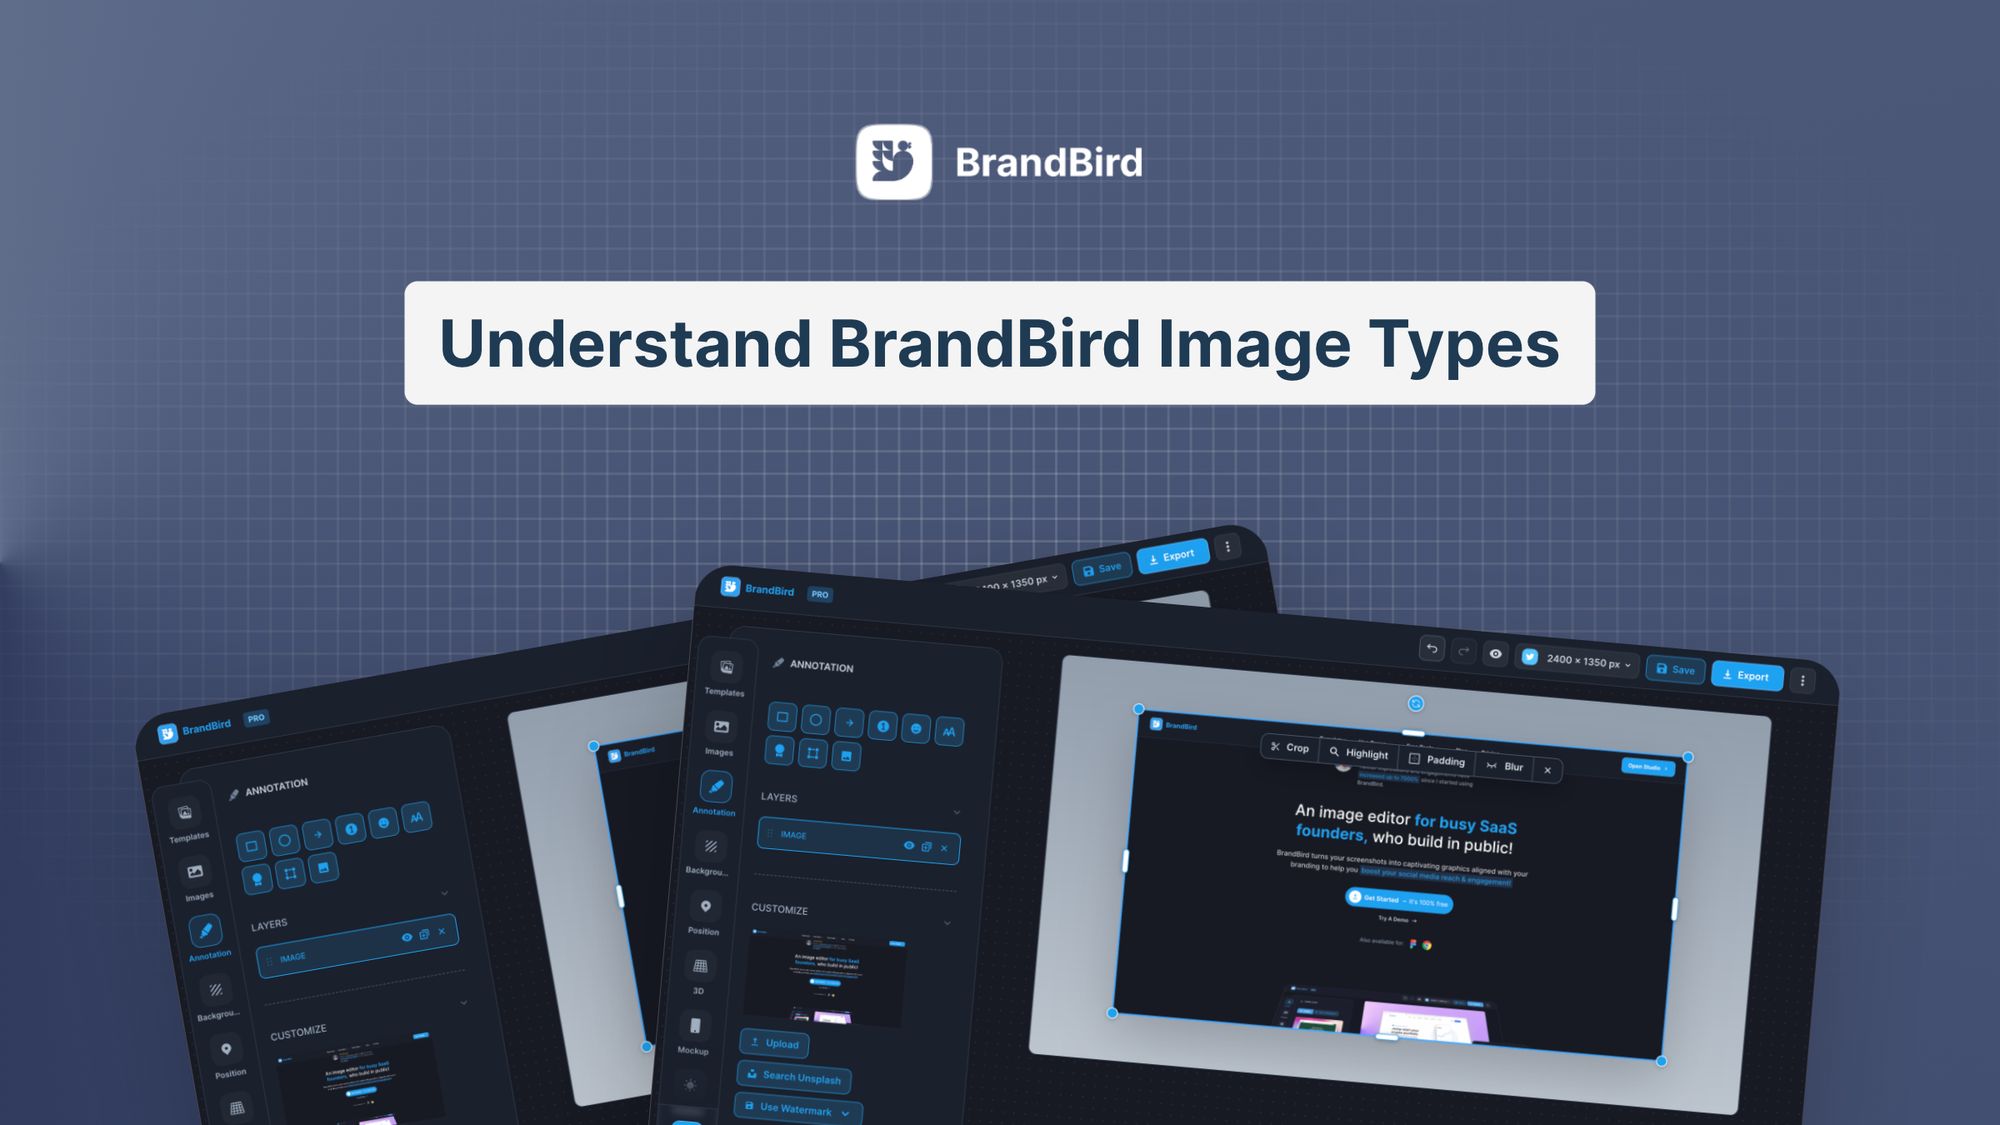 Understand the two BrandBird image types